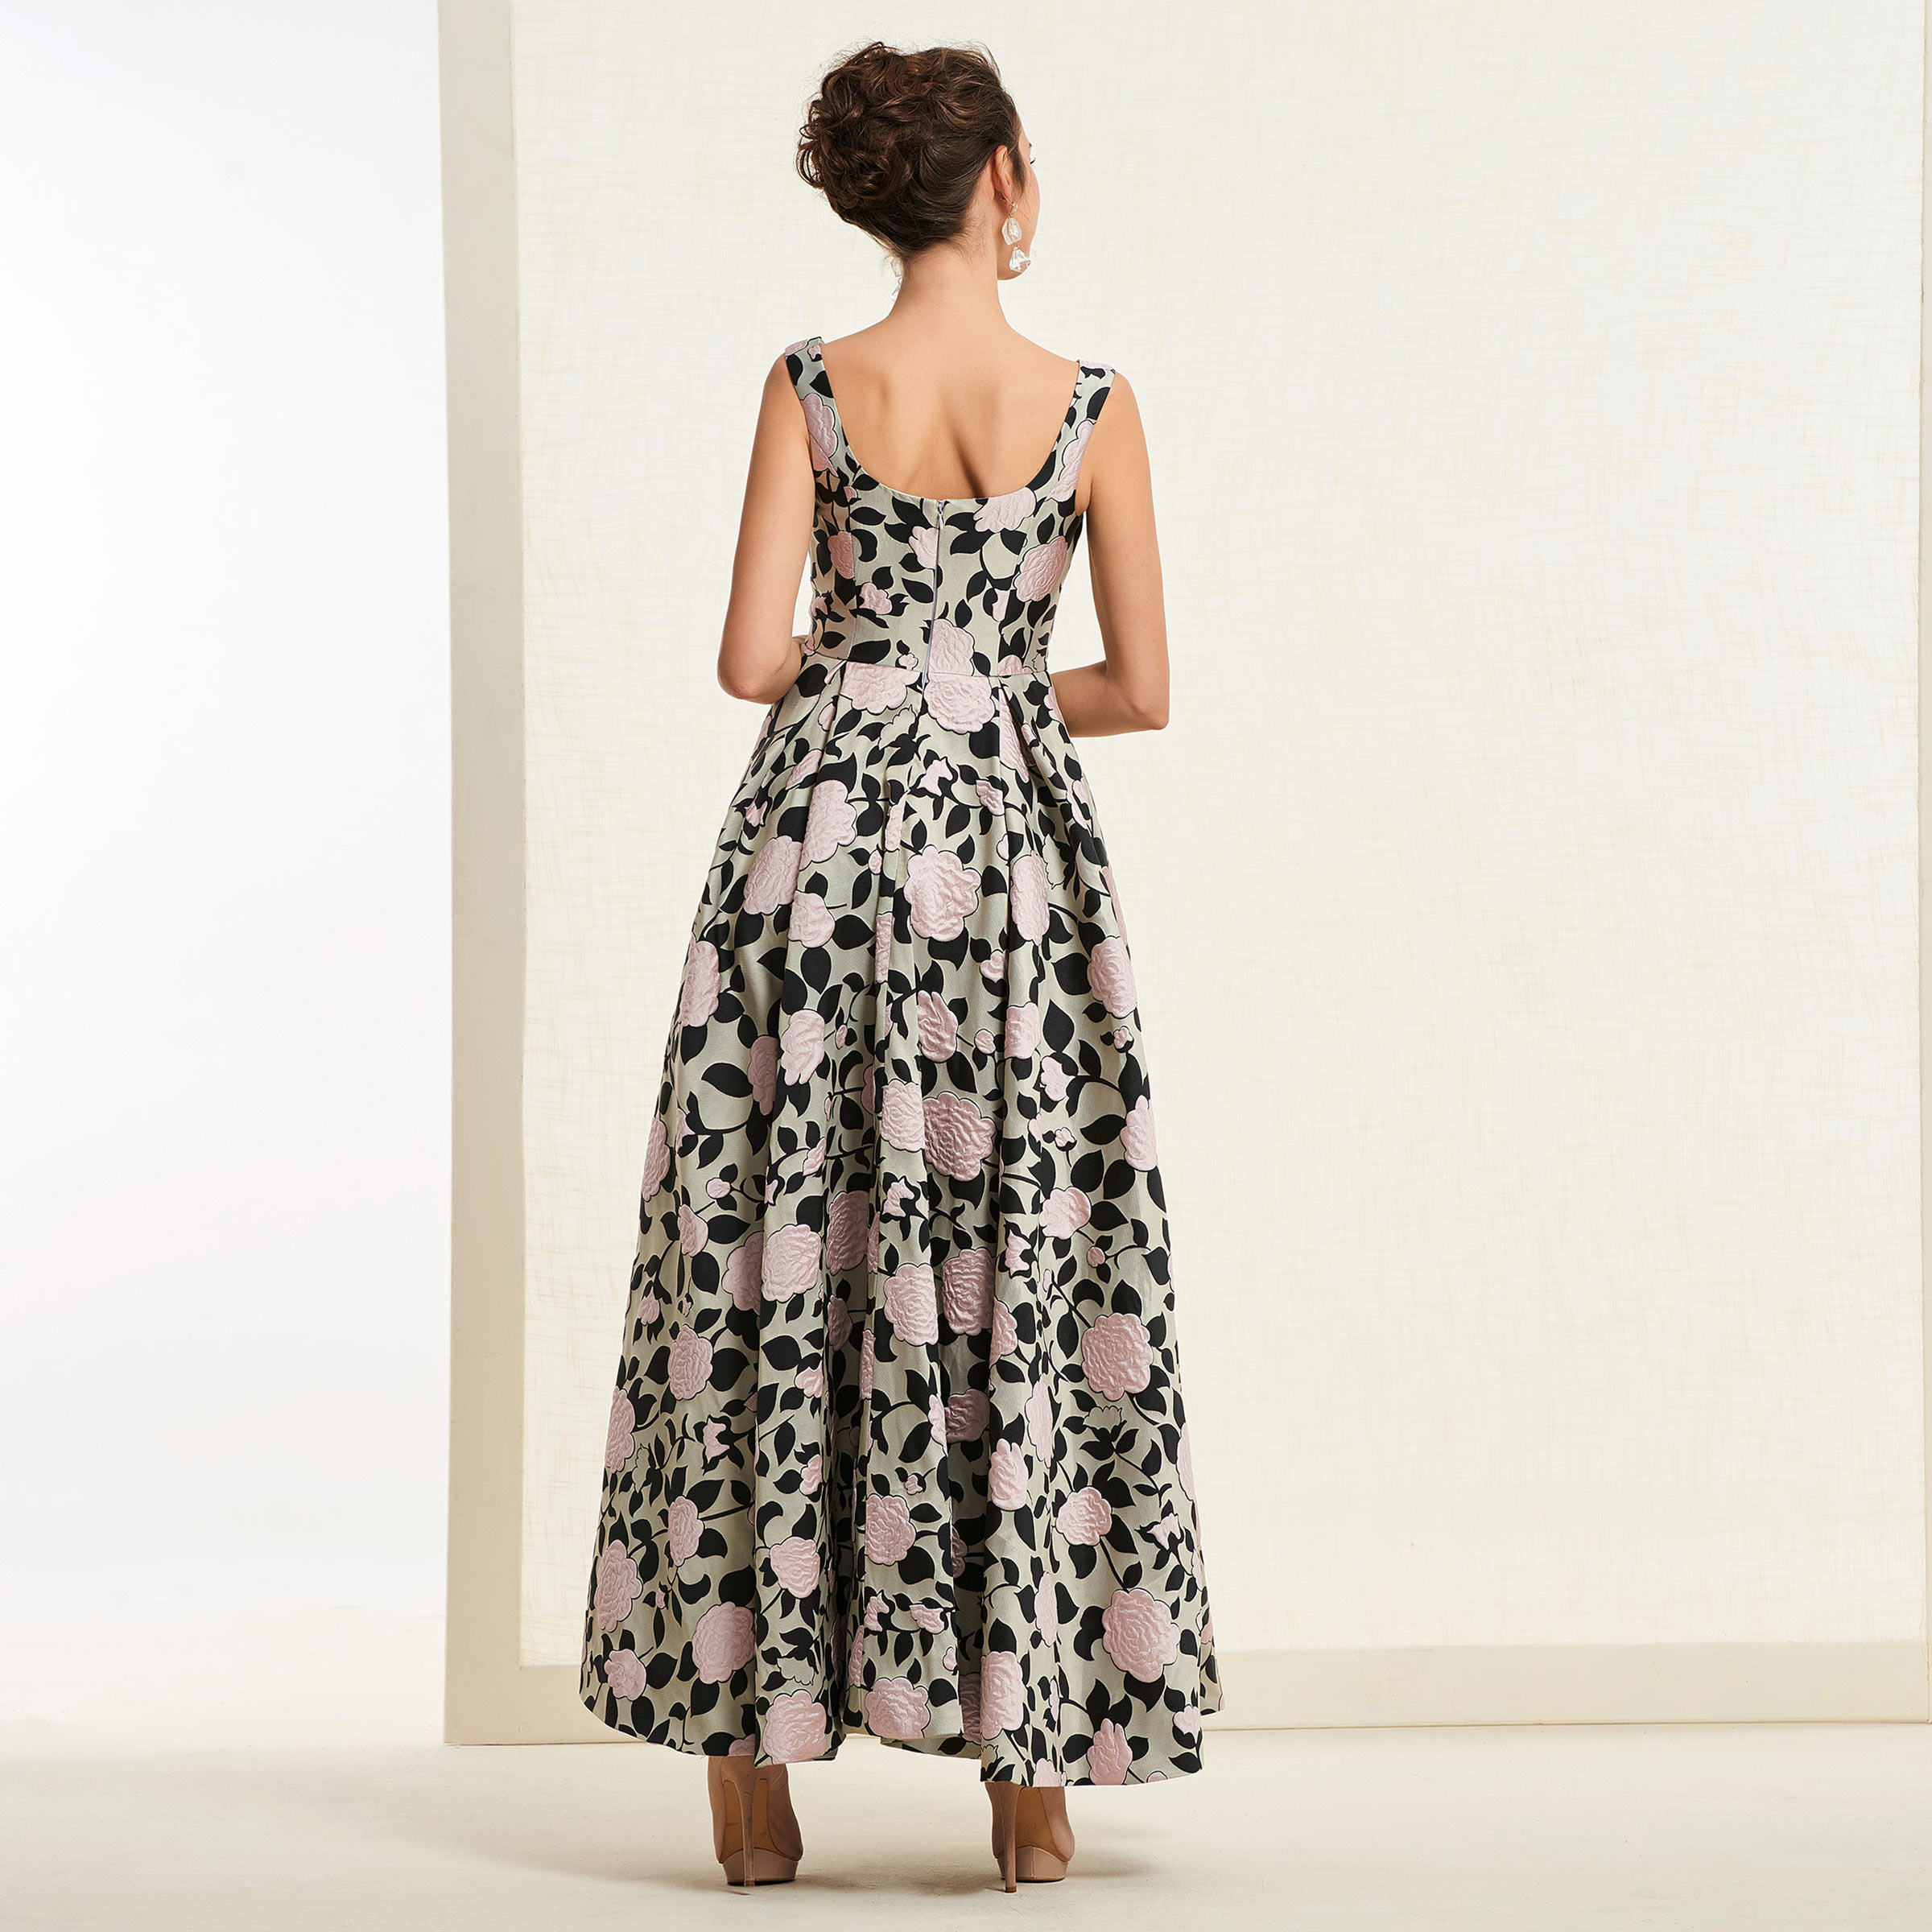 Ericdress Spaghetti Straps Floral Print Prom Dress